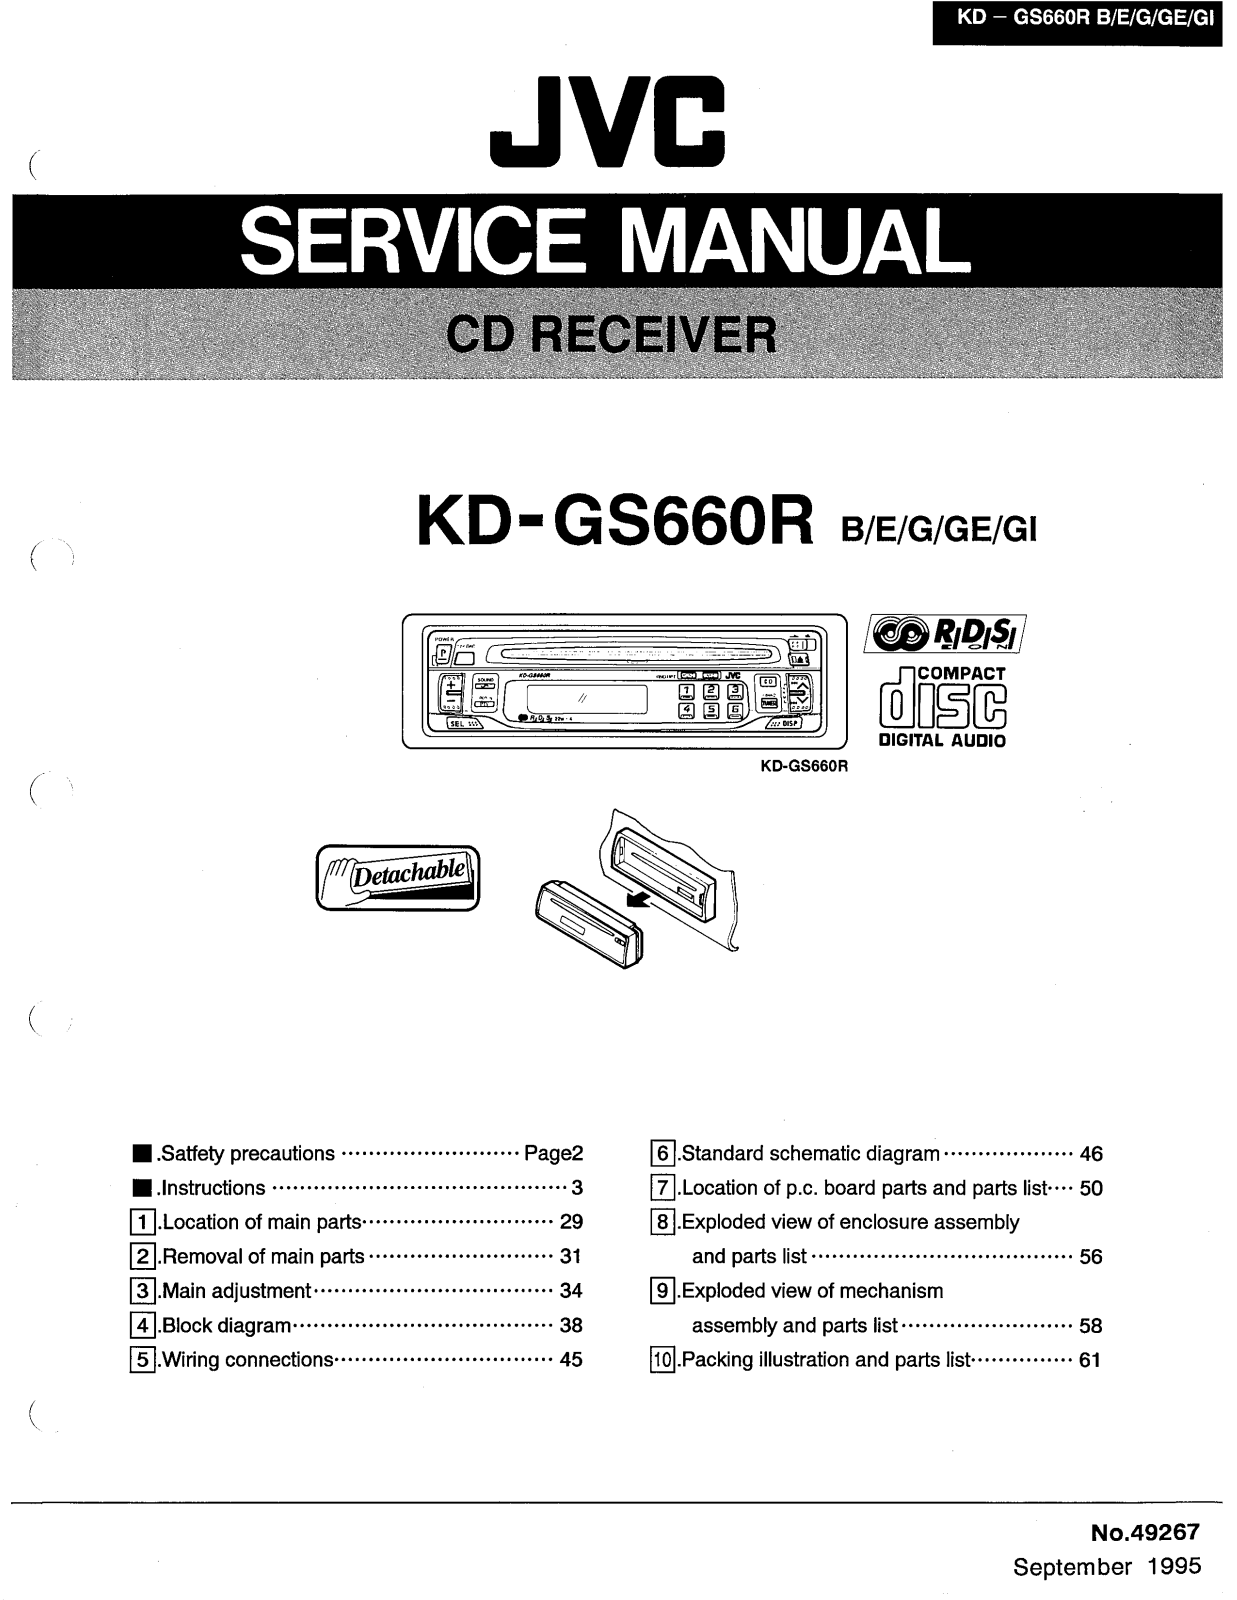 JVC KD-GS660RB, KD-GS660RE, KD-GS660RG, KD-GS660RGE, KD-GS660RGI Service Manual